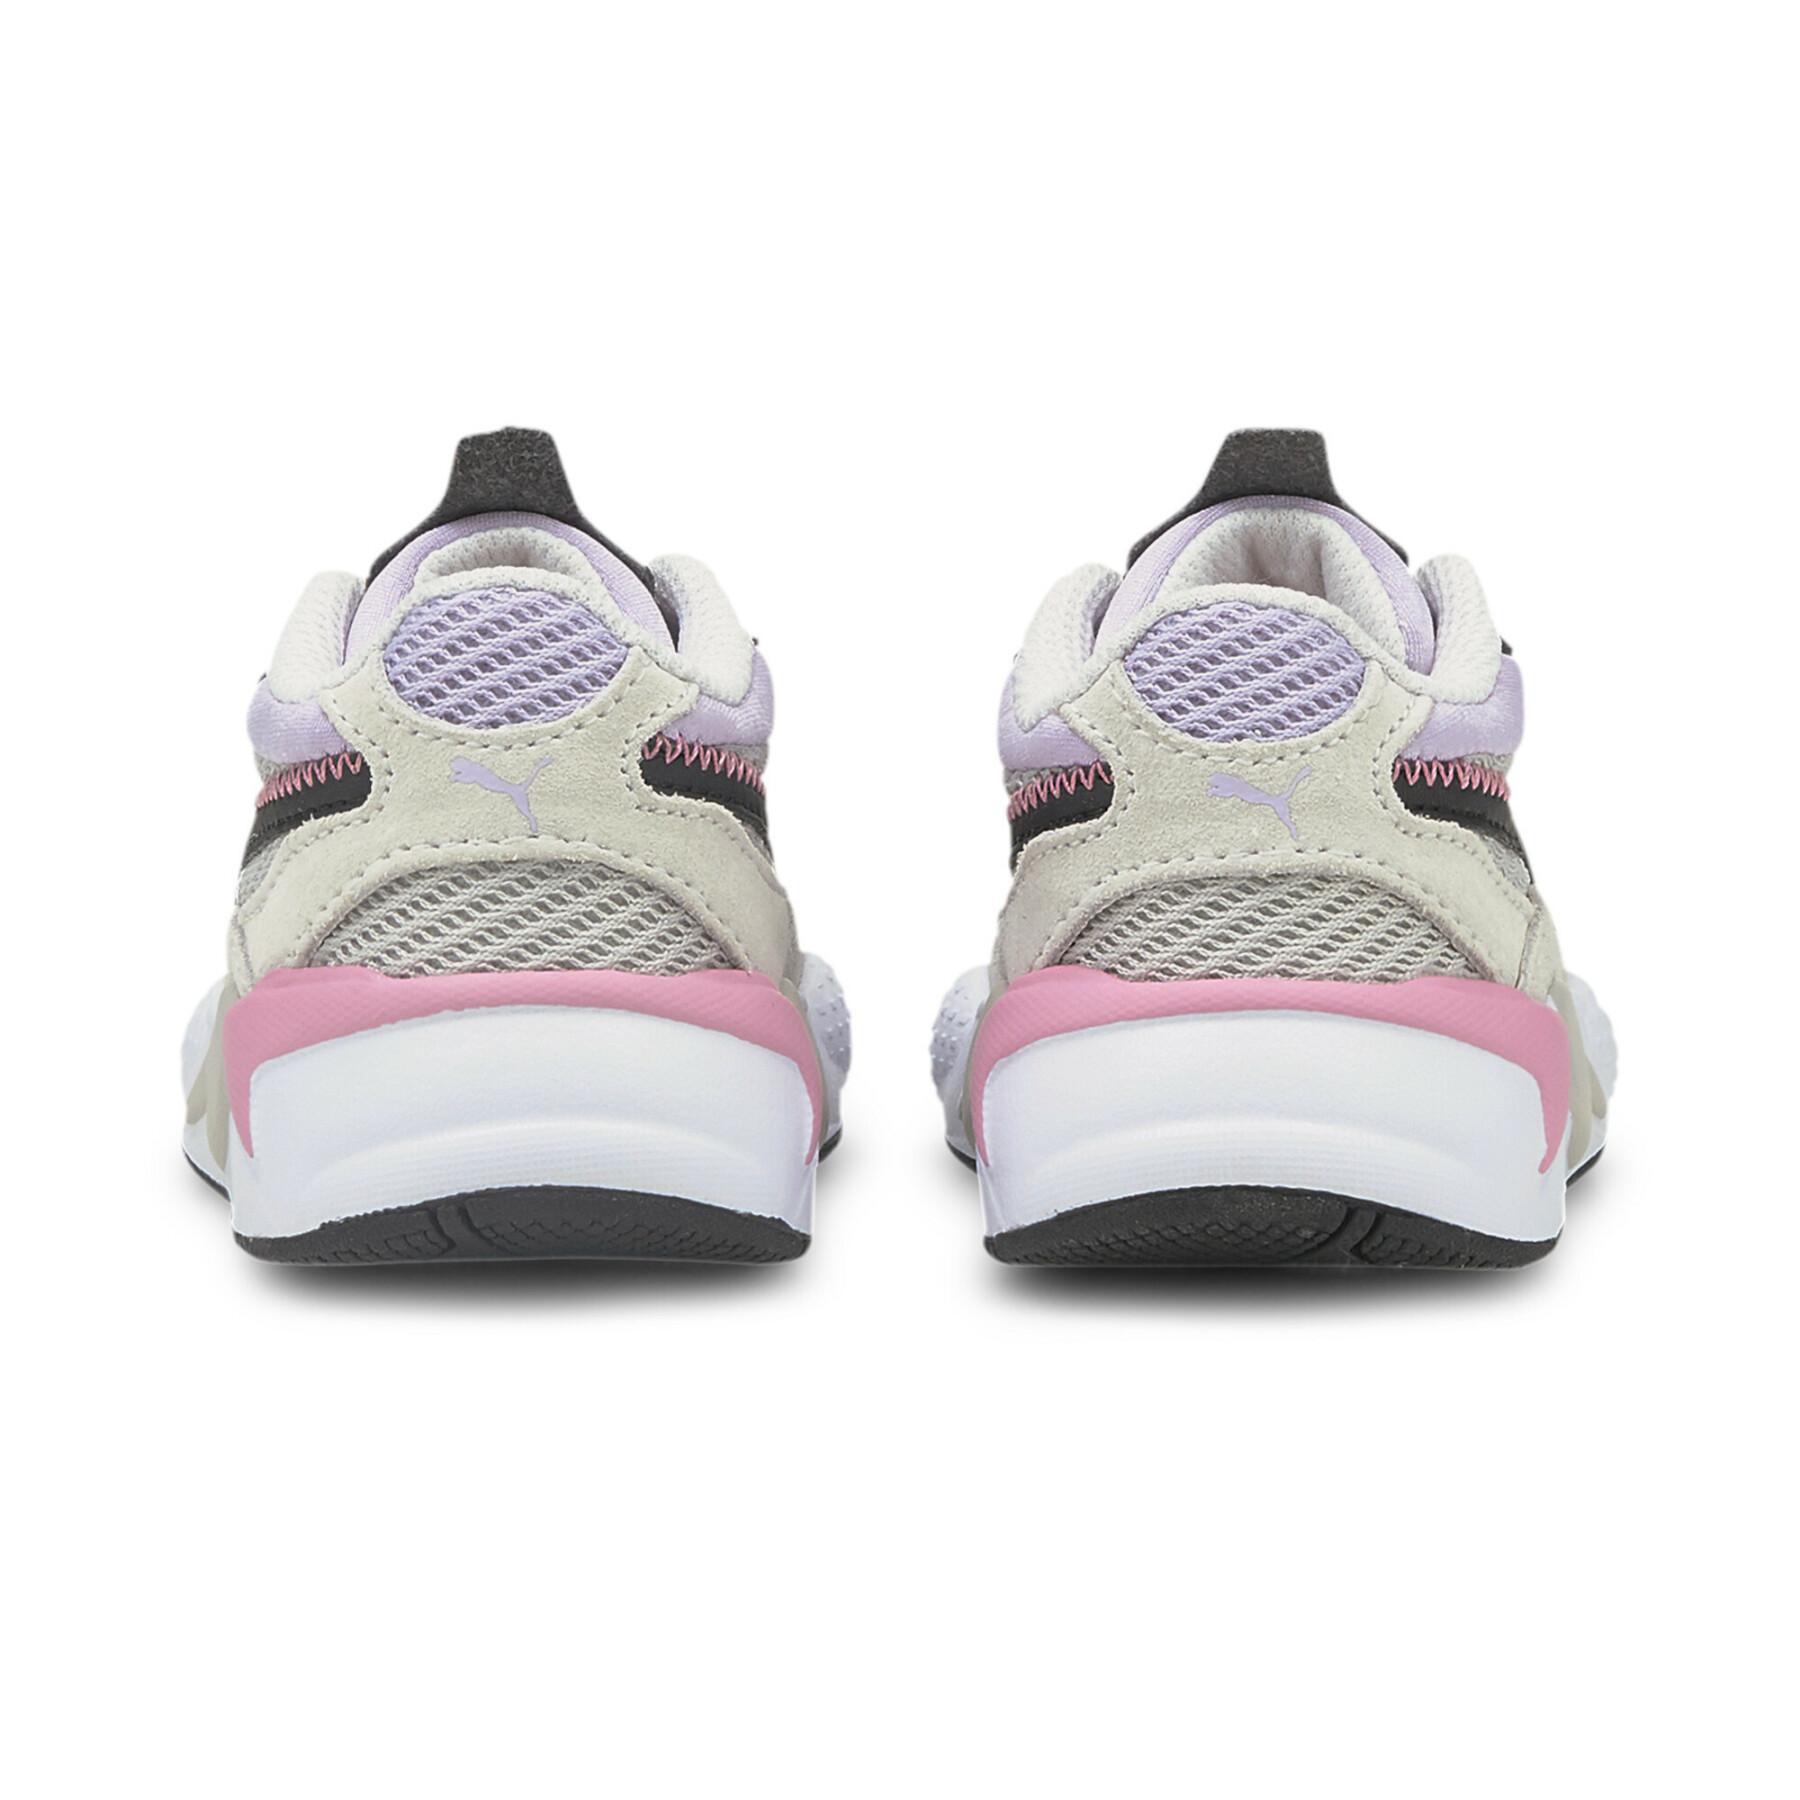 Children's sneakers Puma RS-X³ Twill AirMesh AC